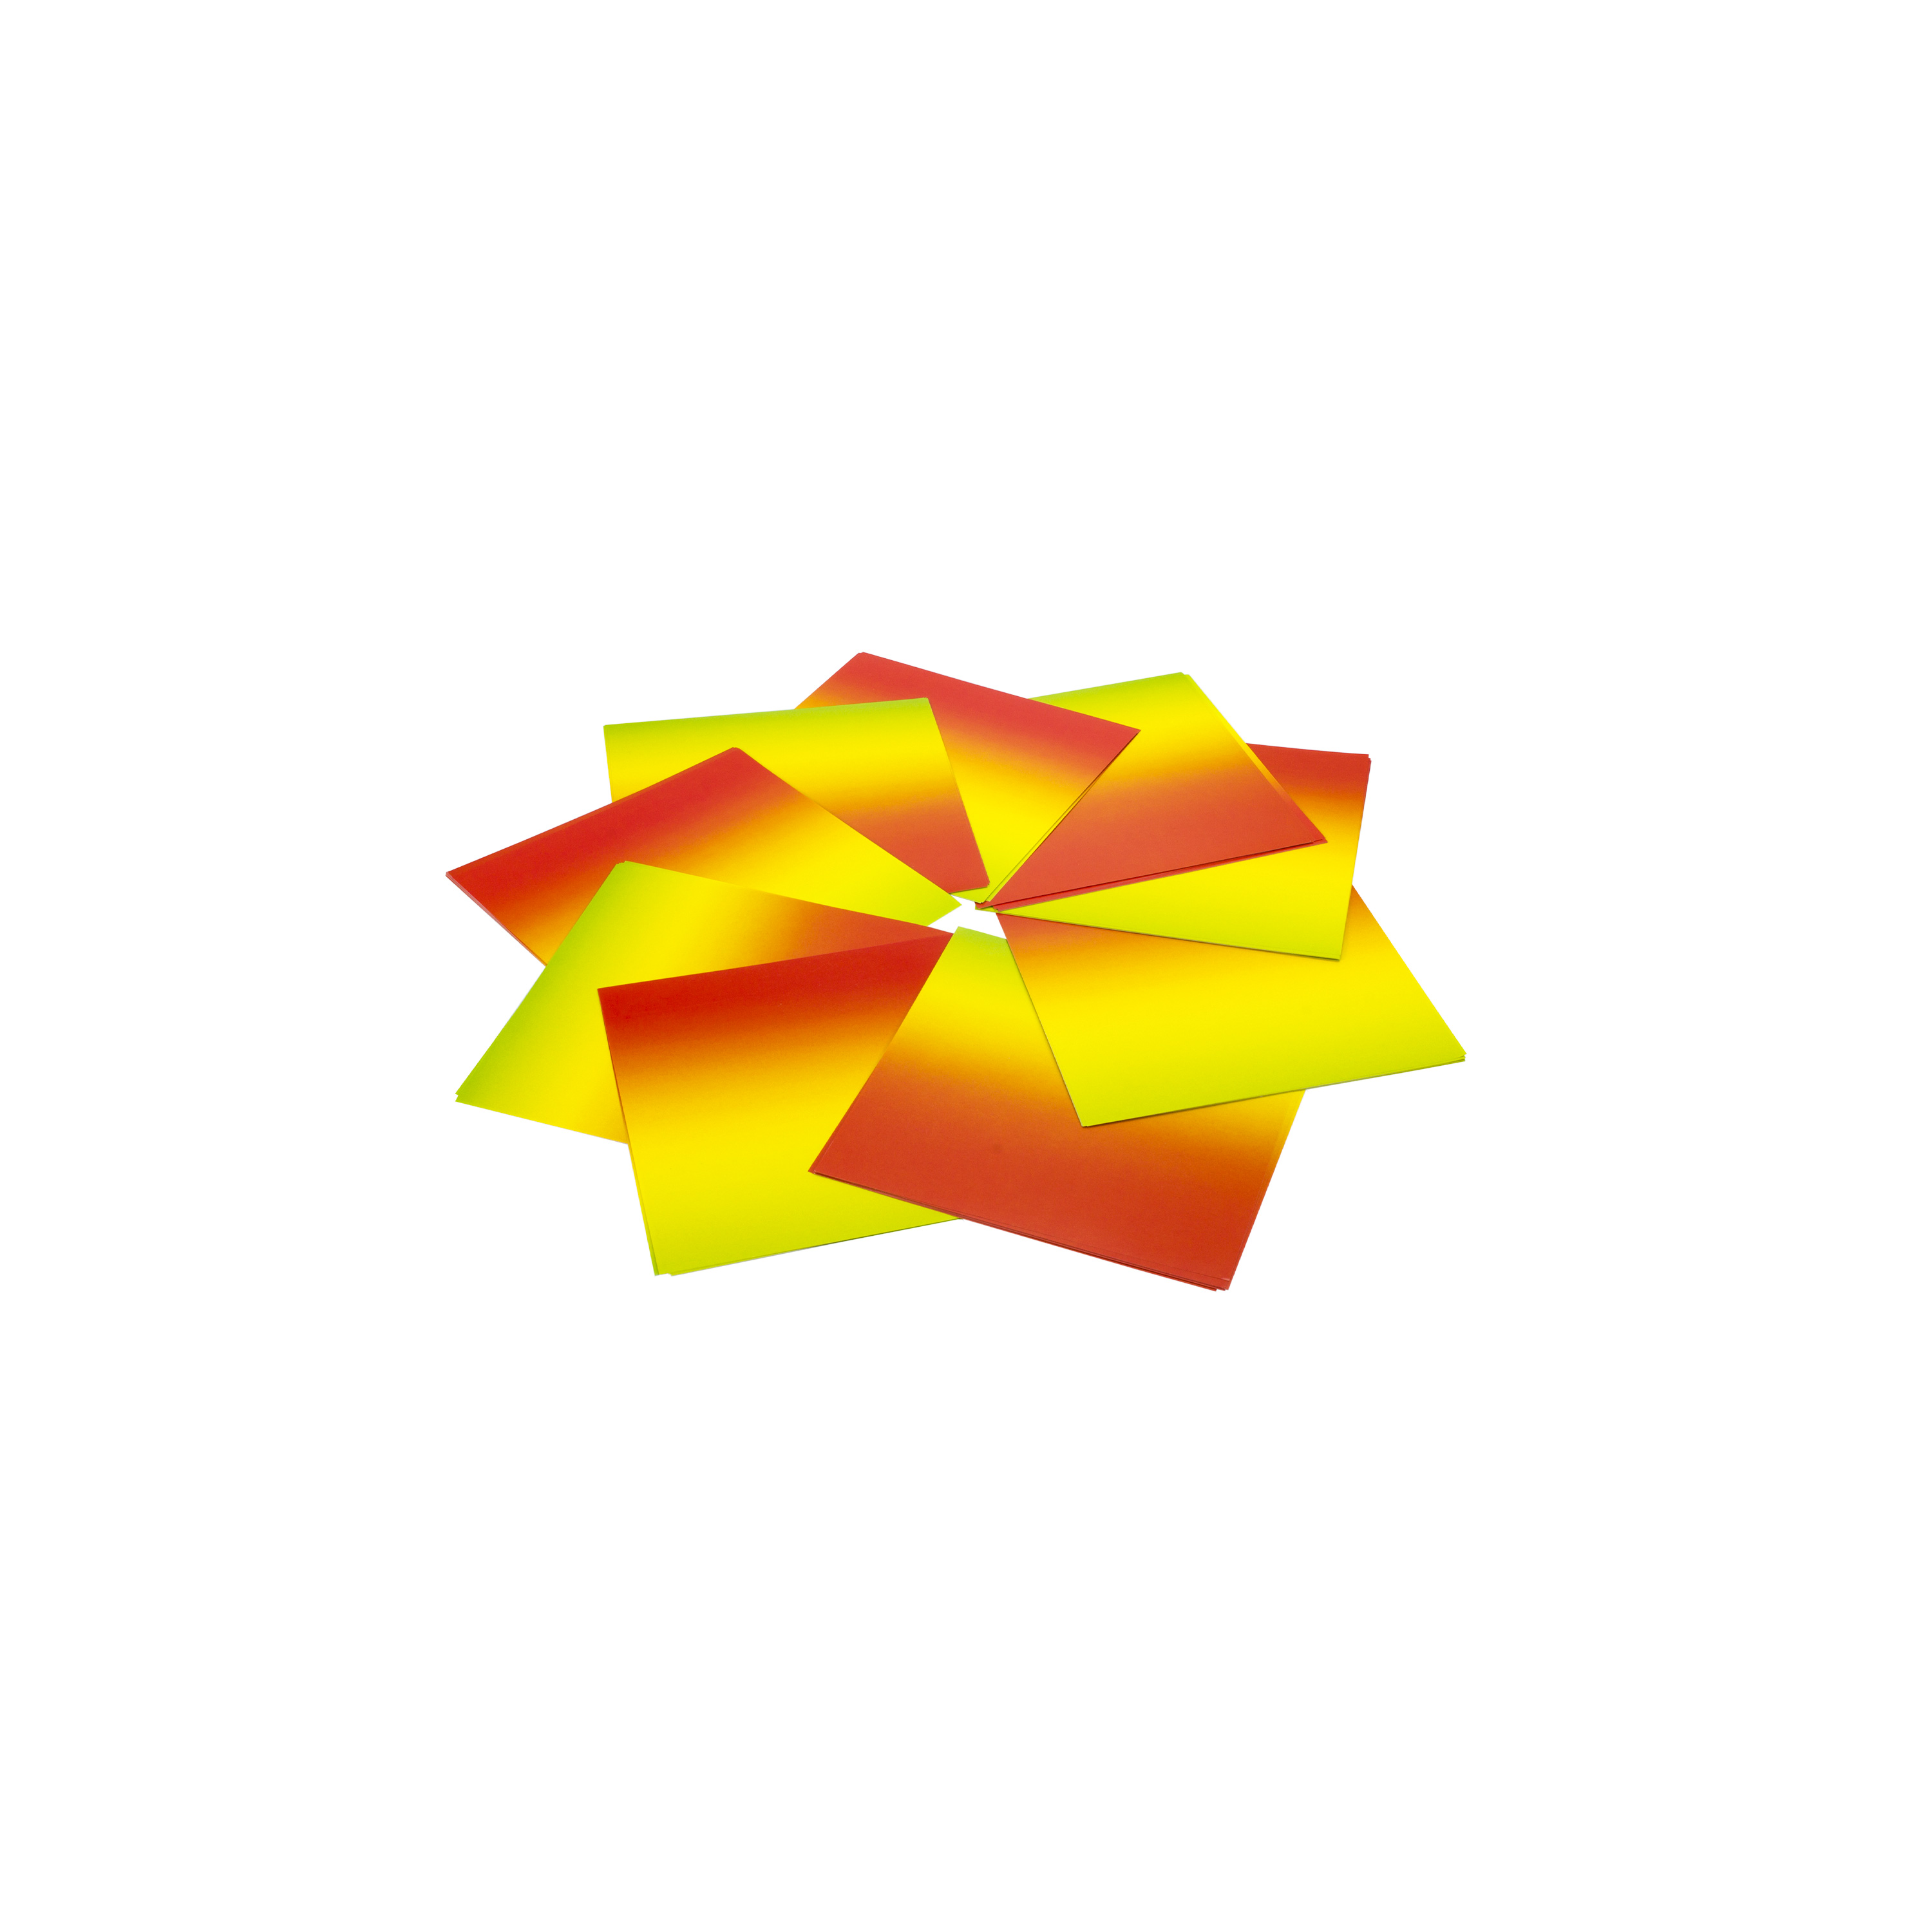 Origami Faltblätter 'Regenbogen', 10 x 10 cm